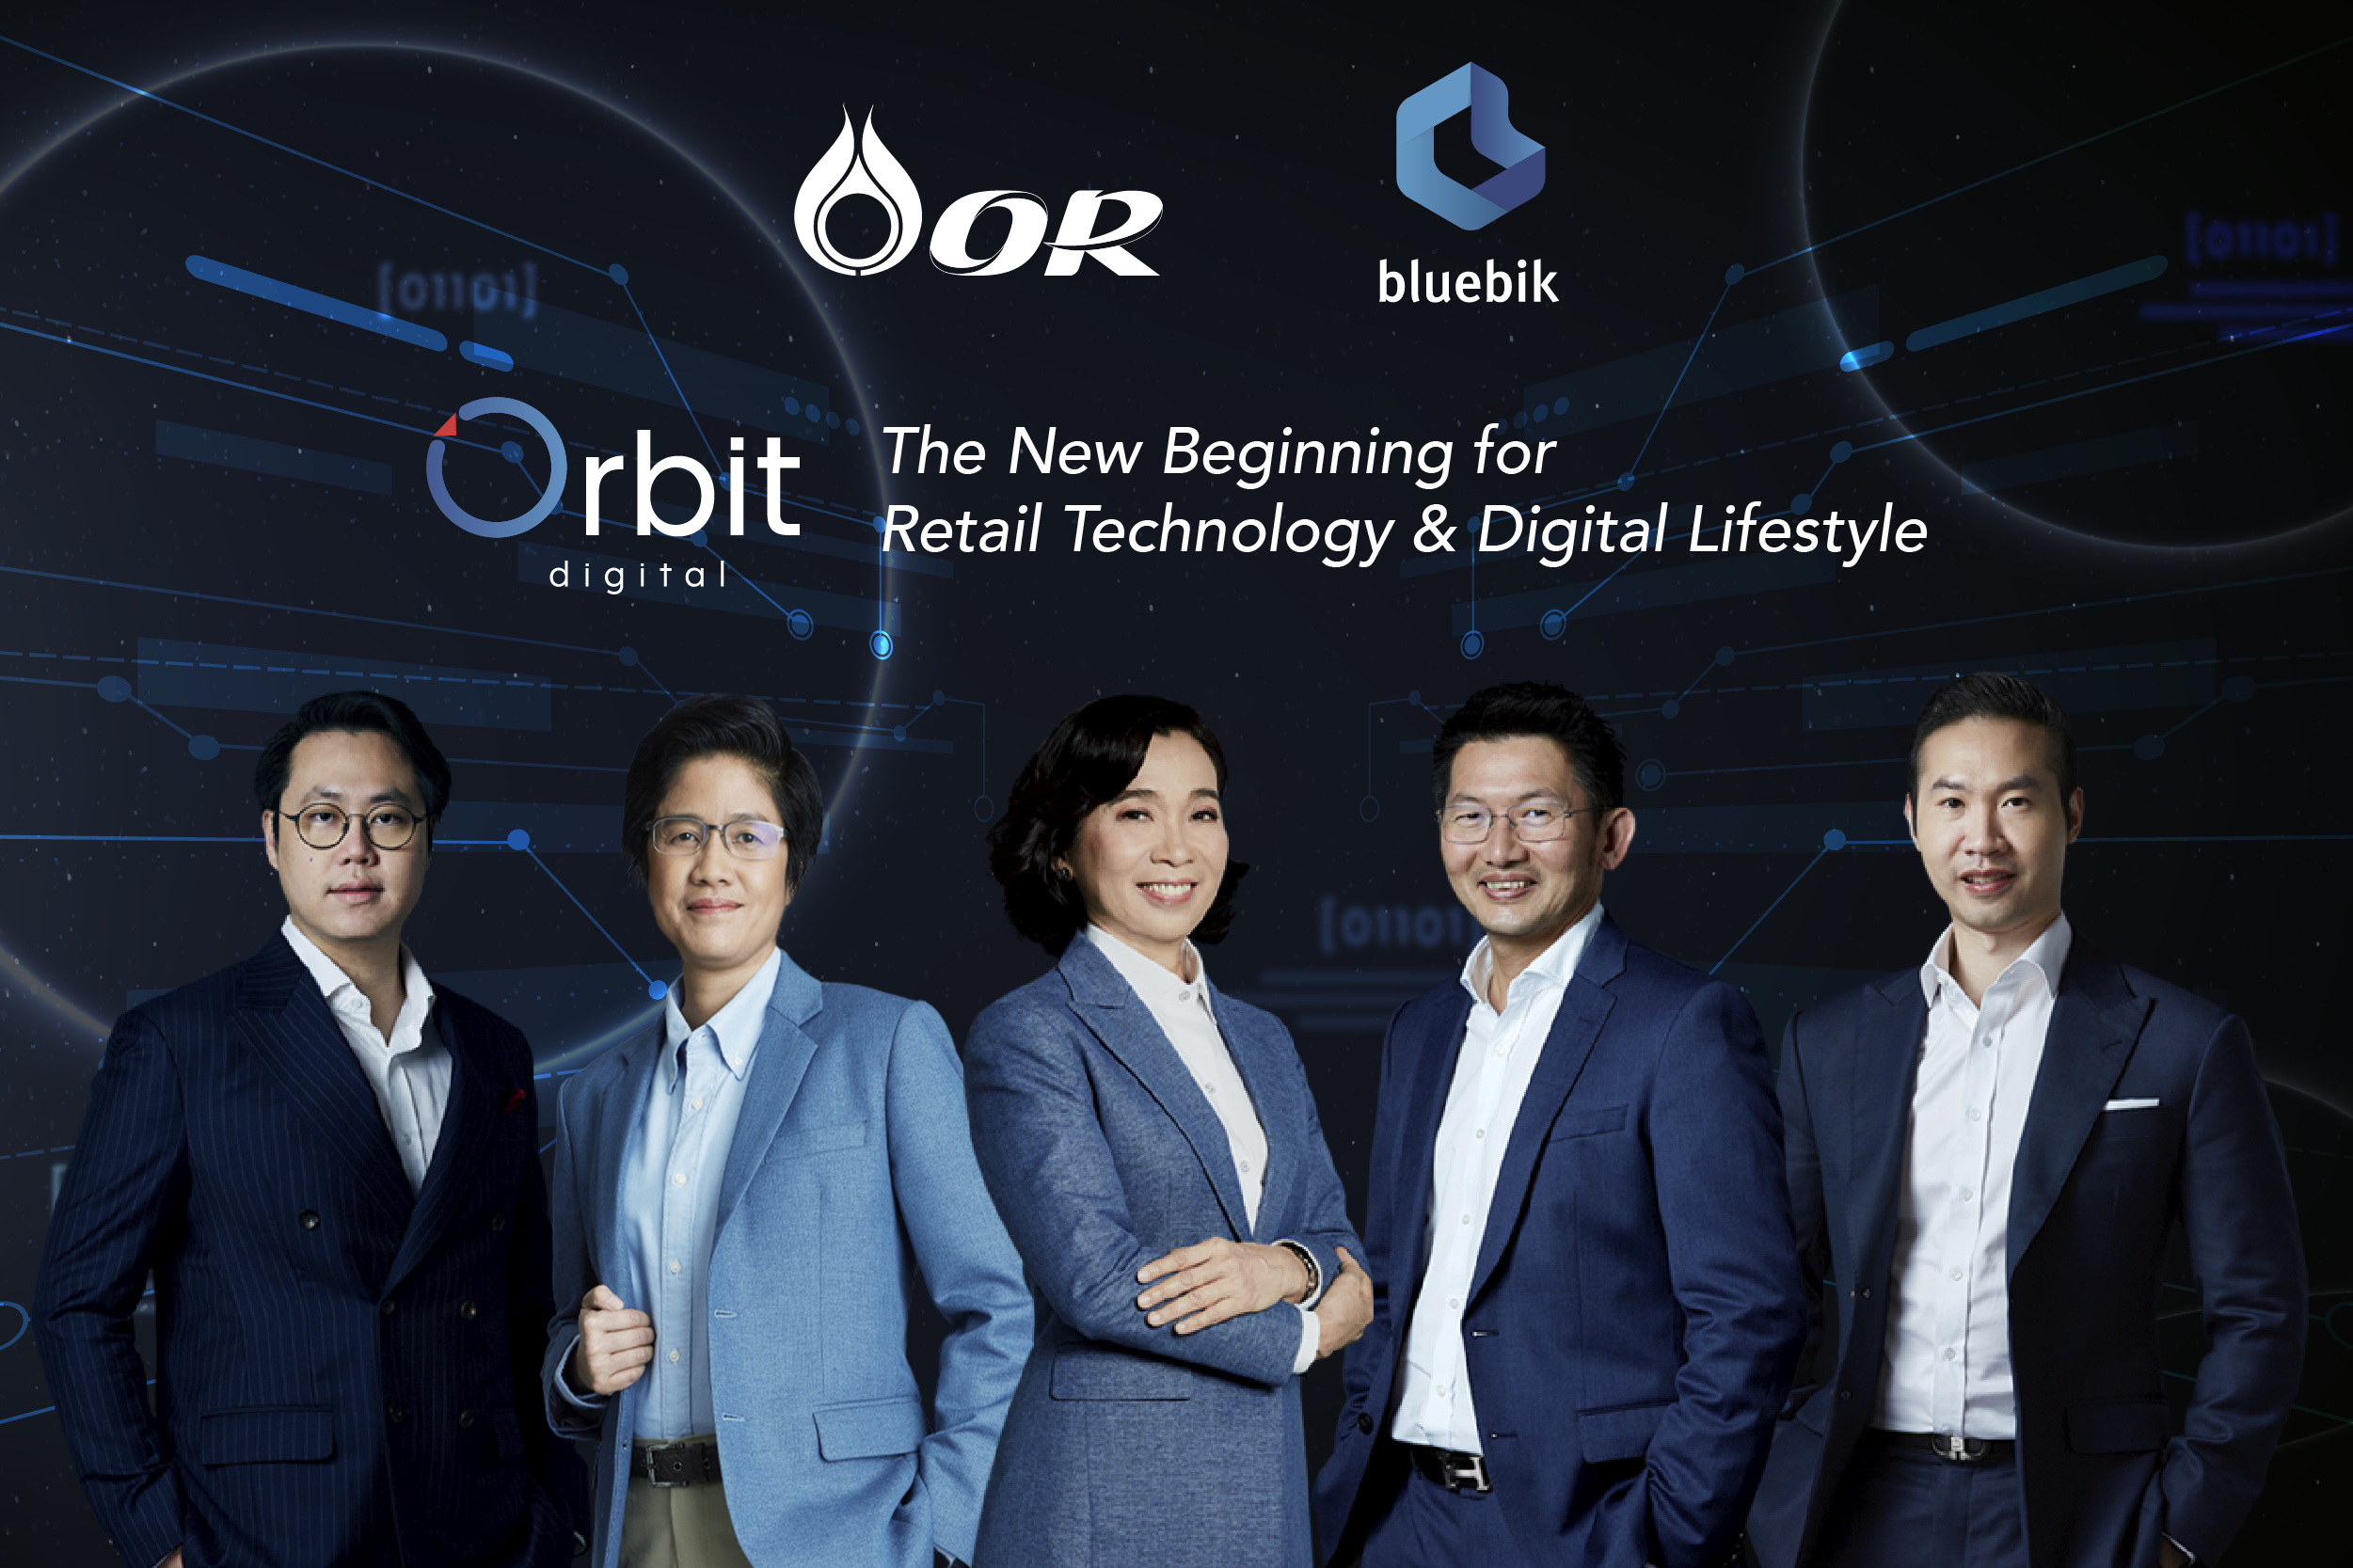 OR ร่วม Bluebik ประกาศเพิ่มทุนเป็น 50 ล้านบาท ใน Orbit Digital เสริมแกร่งศักยภาพด้านดิจิทัล ลุยนวัตกรรม IT และ Big Data